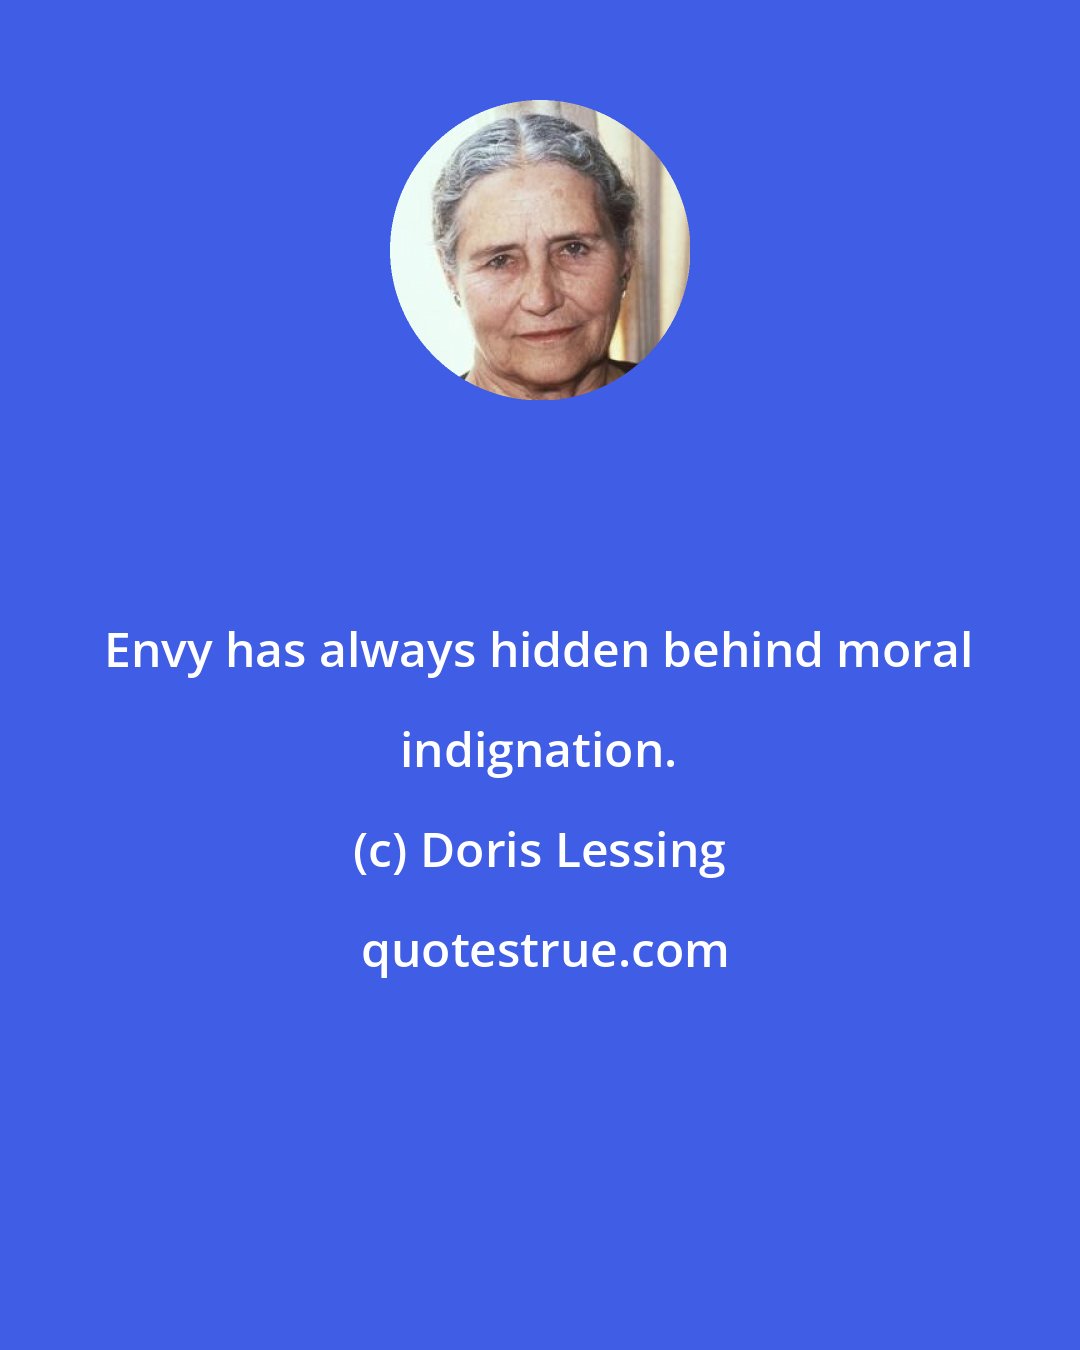 Doris Lessing: Envy has always hidden behind moral indignation.